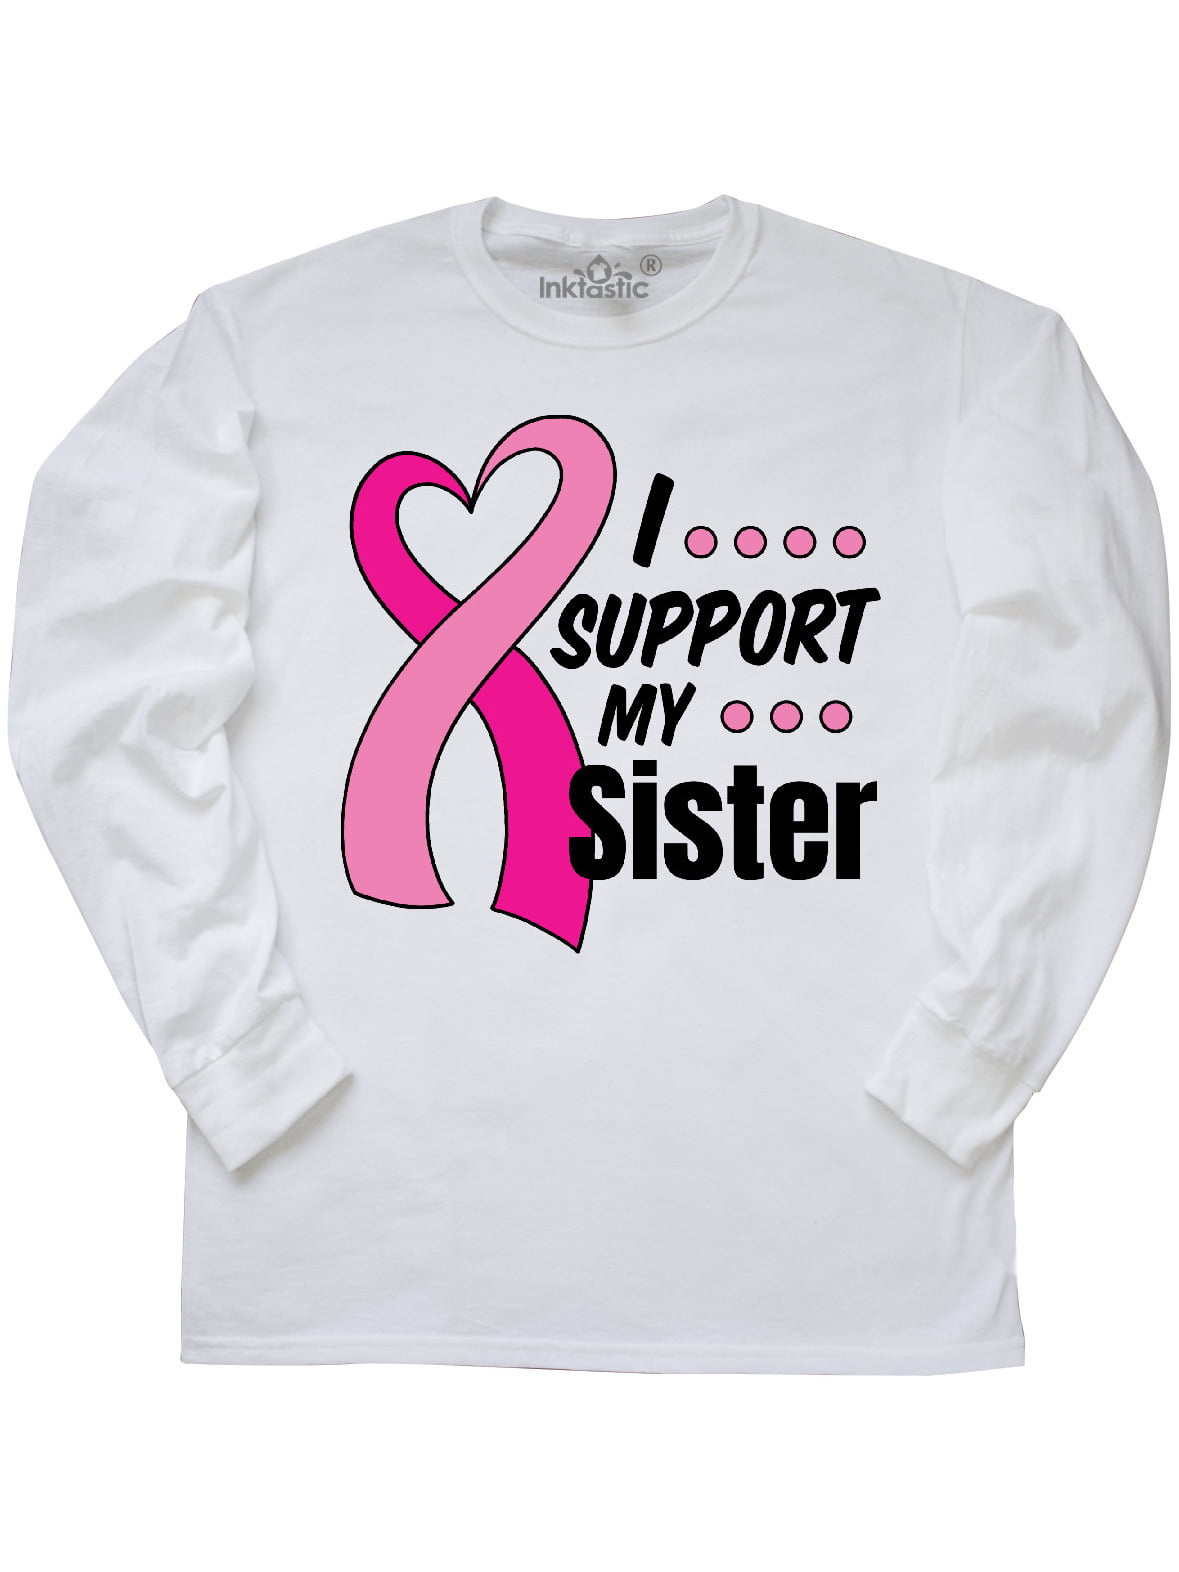 Breast Cancer awareness Friend PINK Ribbon survivor support Unisex Men T-shirt